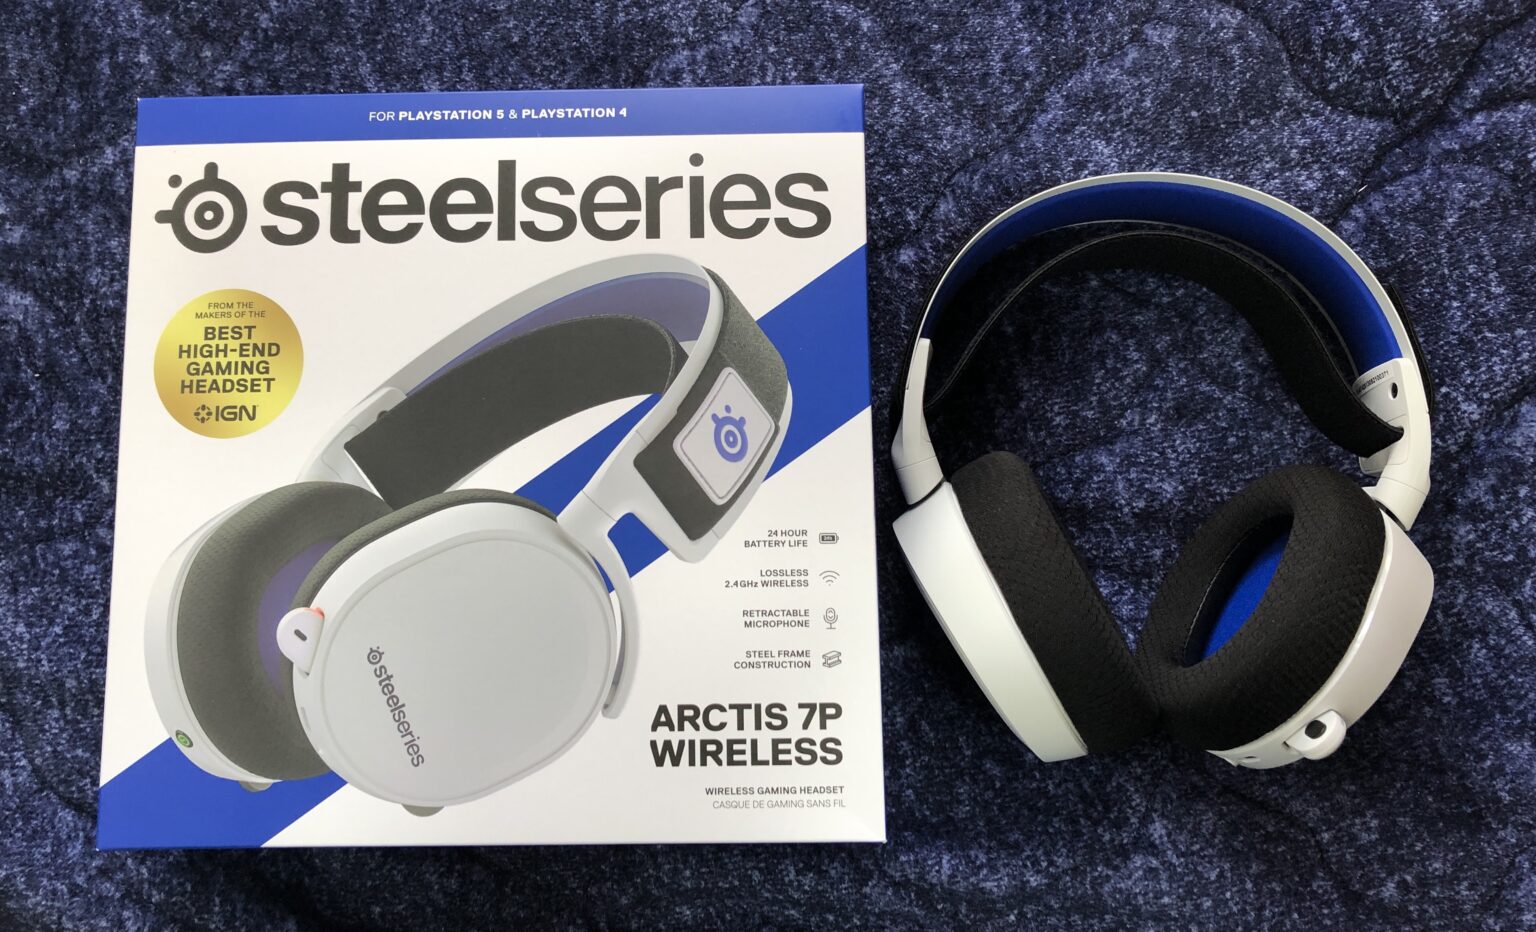 SteelSeries Arctis 7P